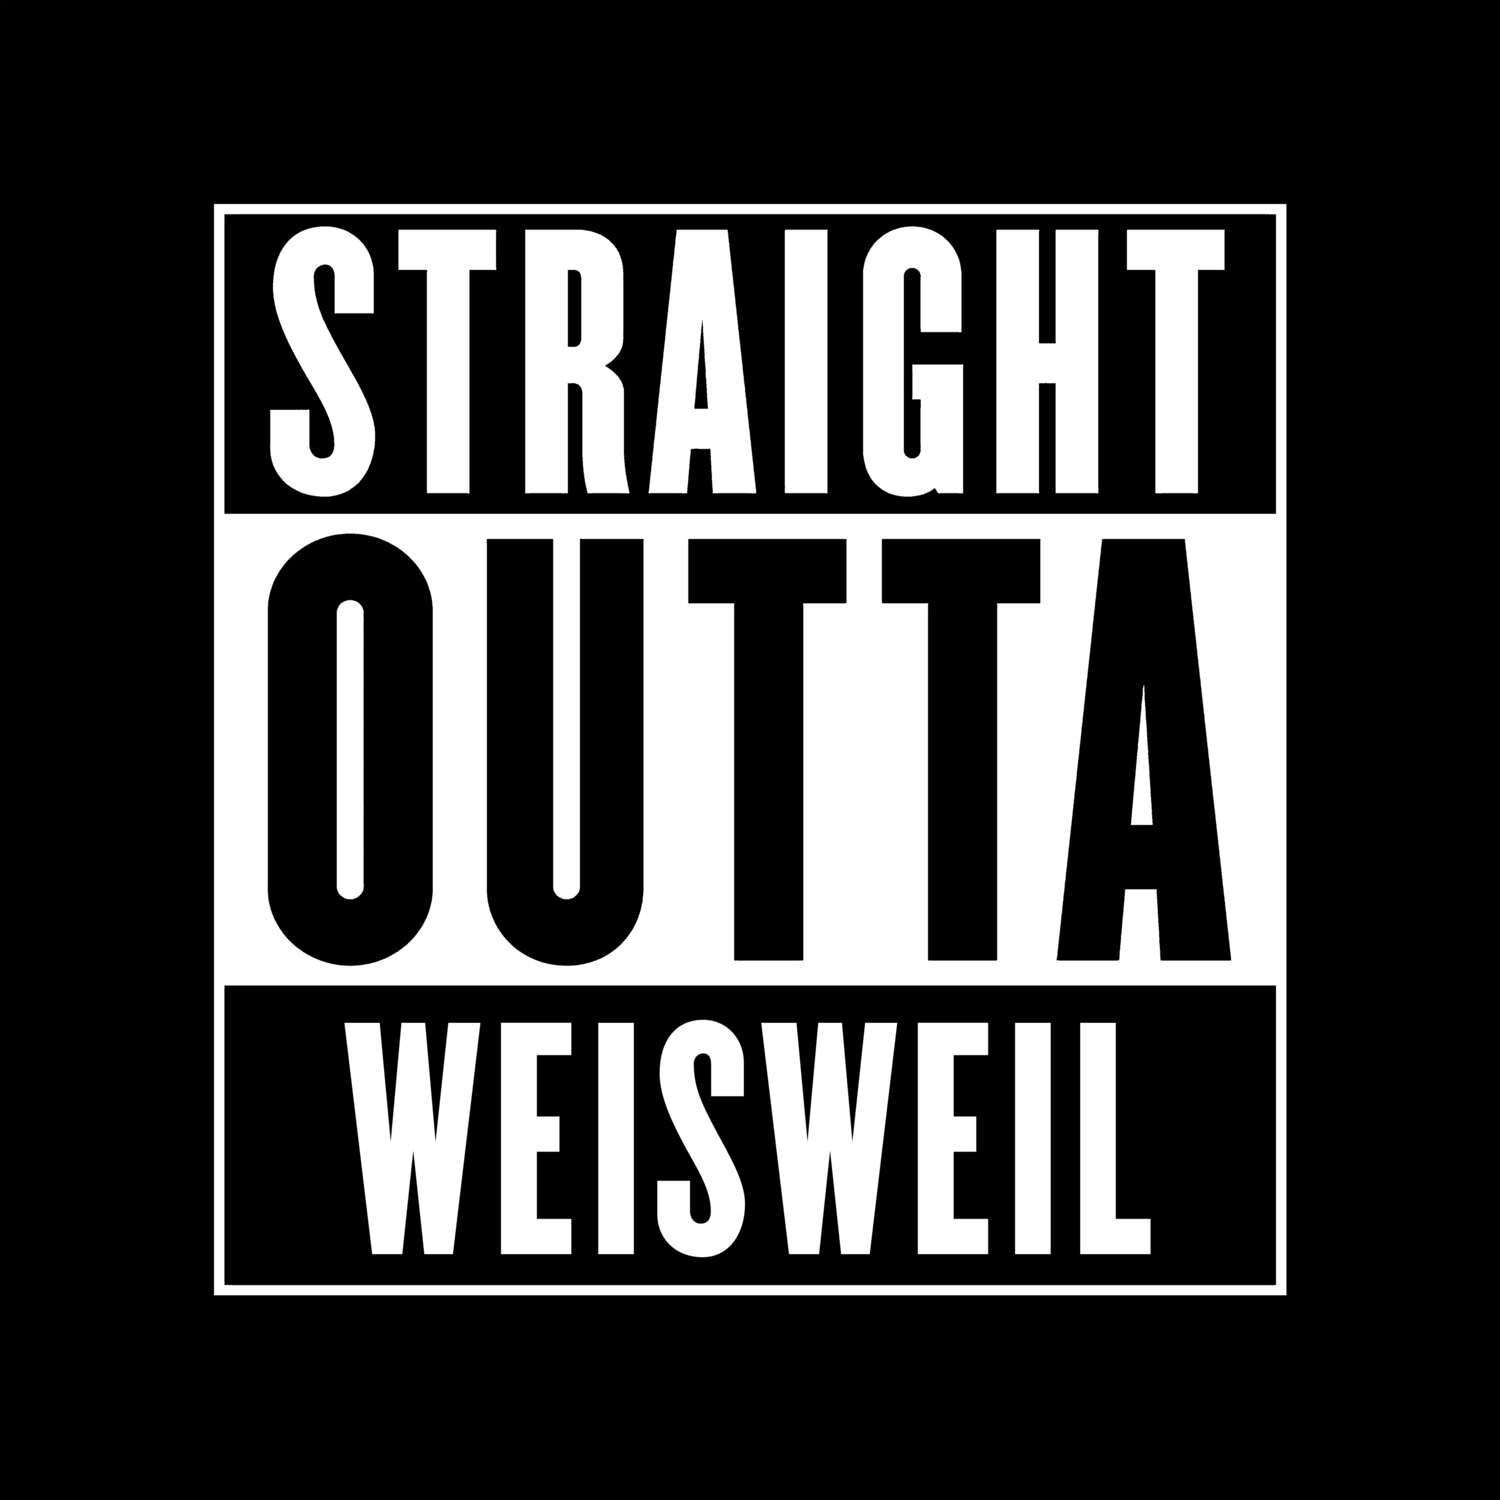 Weisweil T-Shirt »Straight Outta«